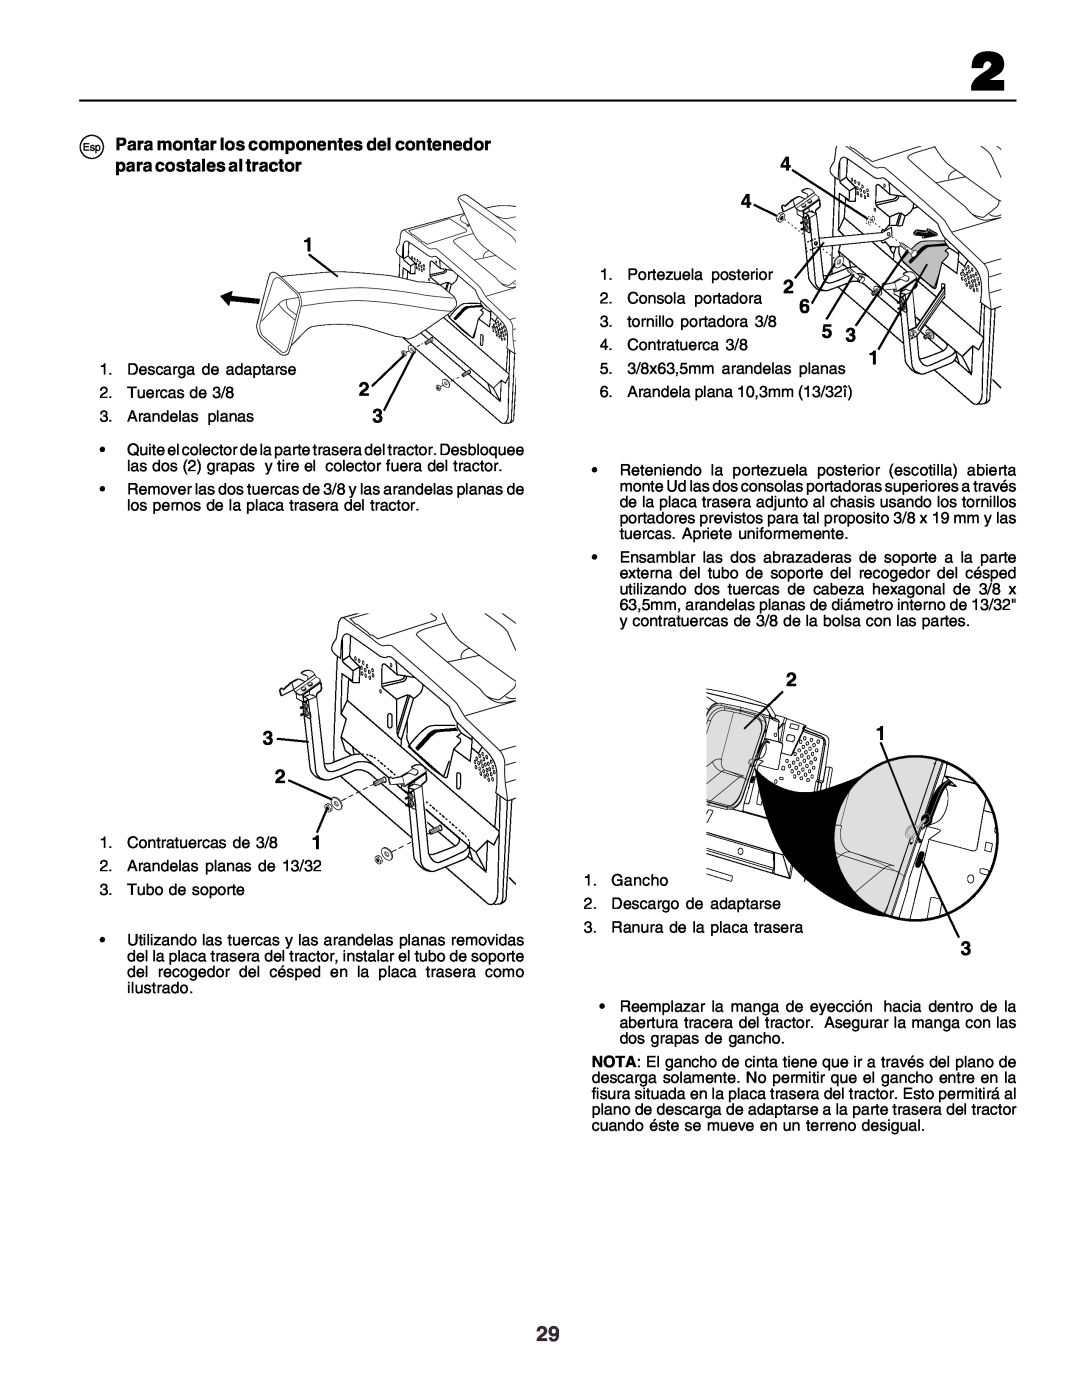 Husqvarna CT160 instruction manual Portezuela posterior 